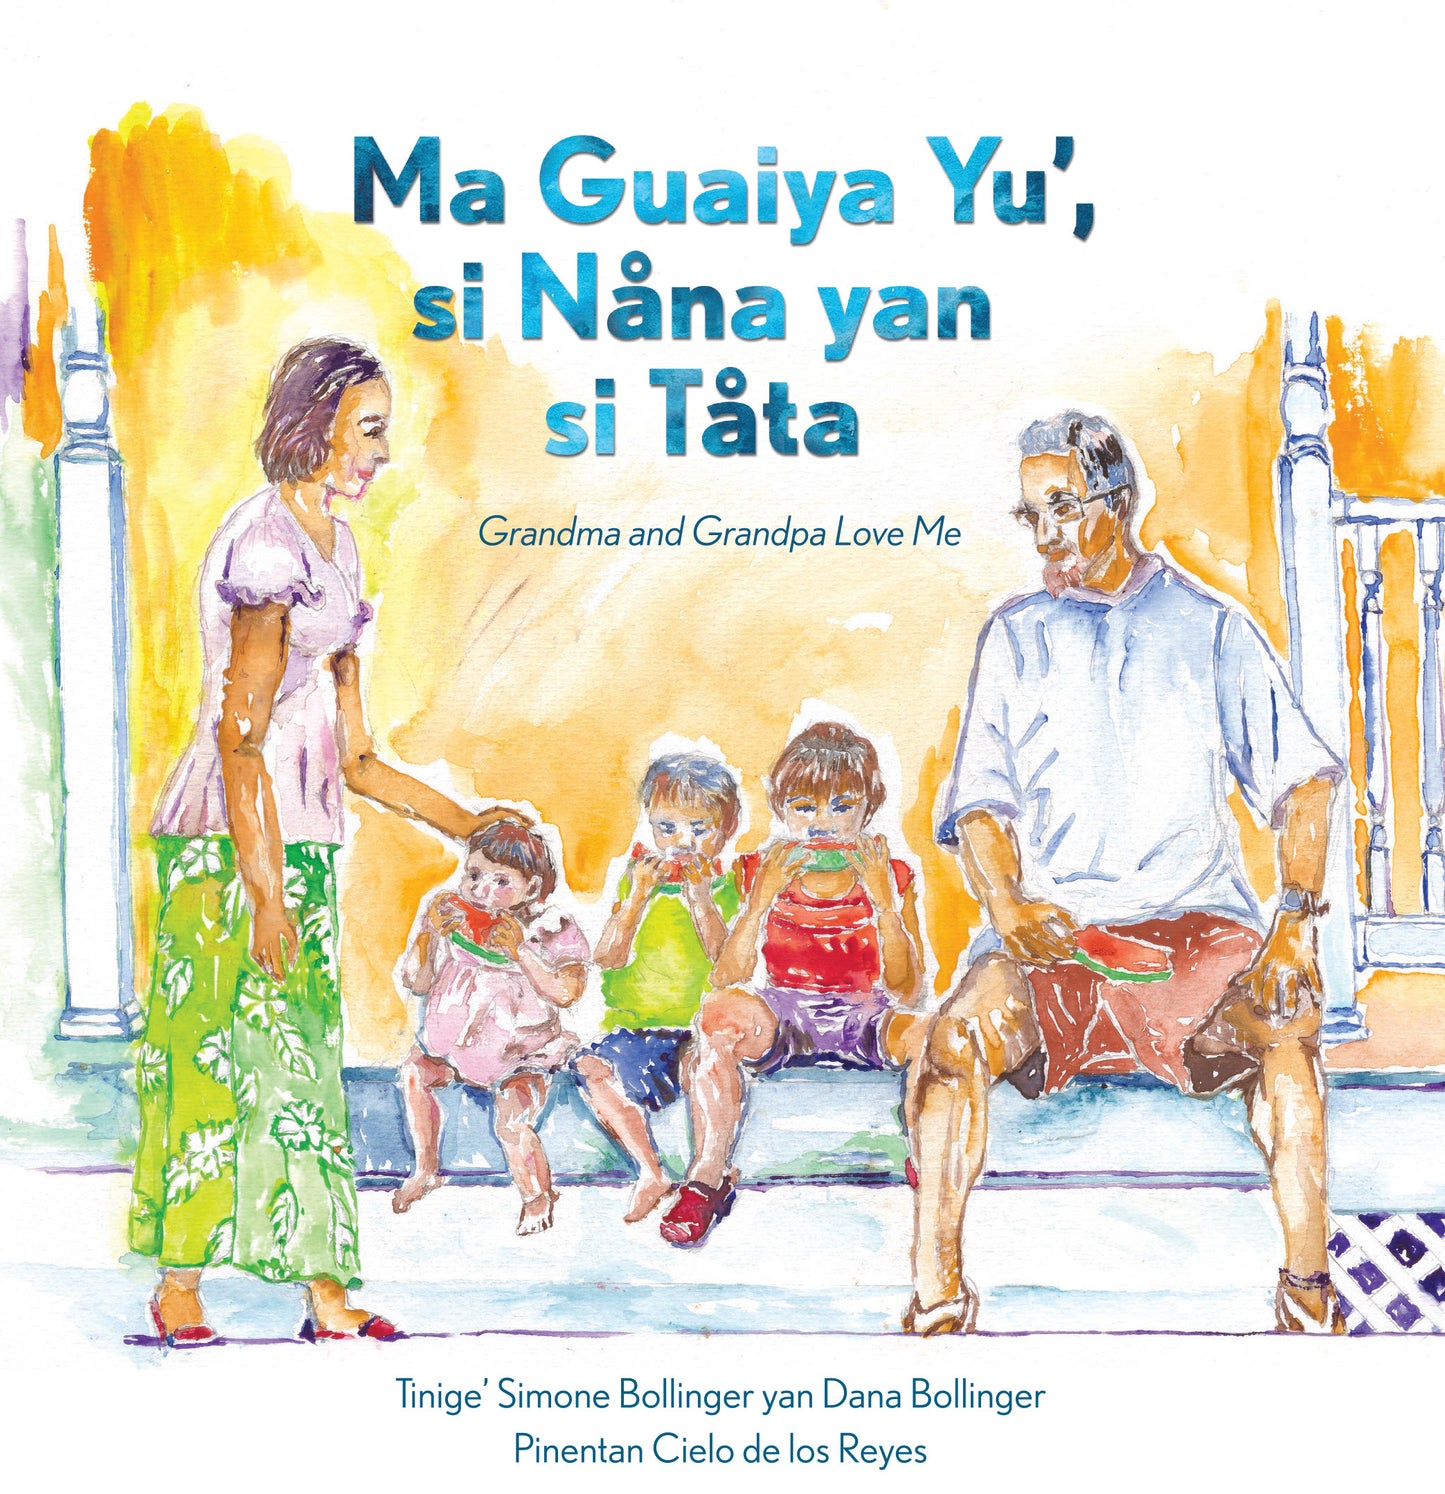 Ma Guaiya Yu’, si Nåna yan si Tåta (Grandma and Grandpa Love Me)